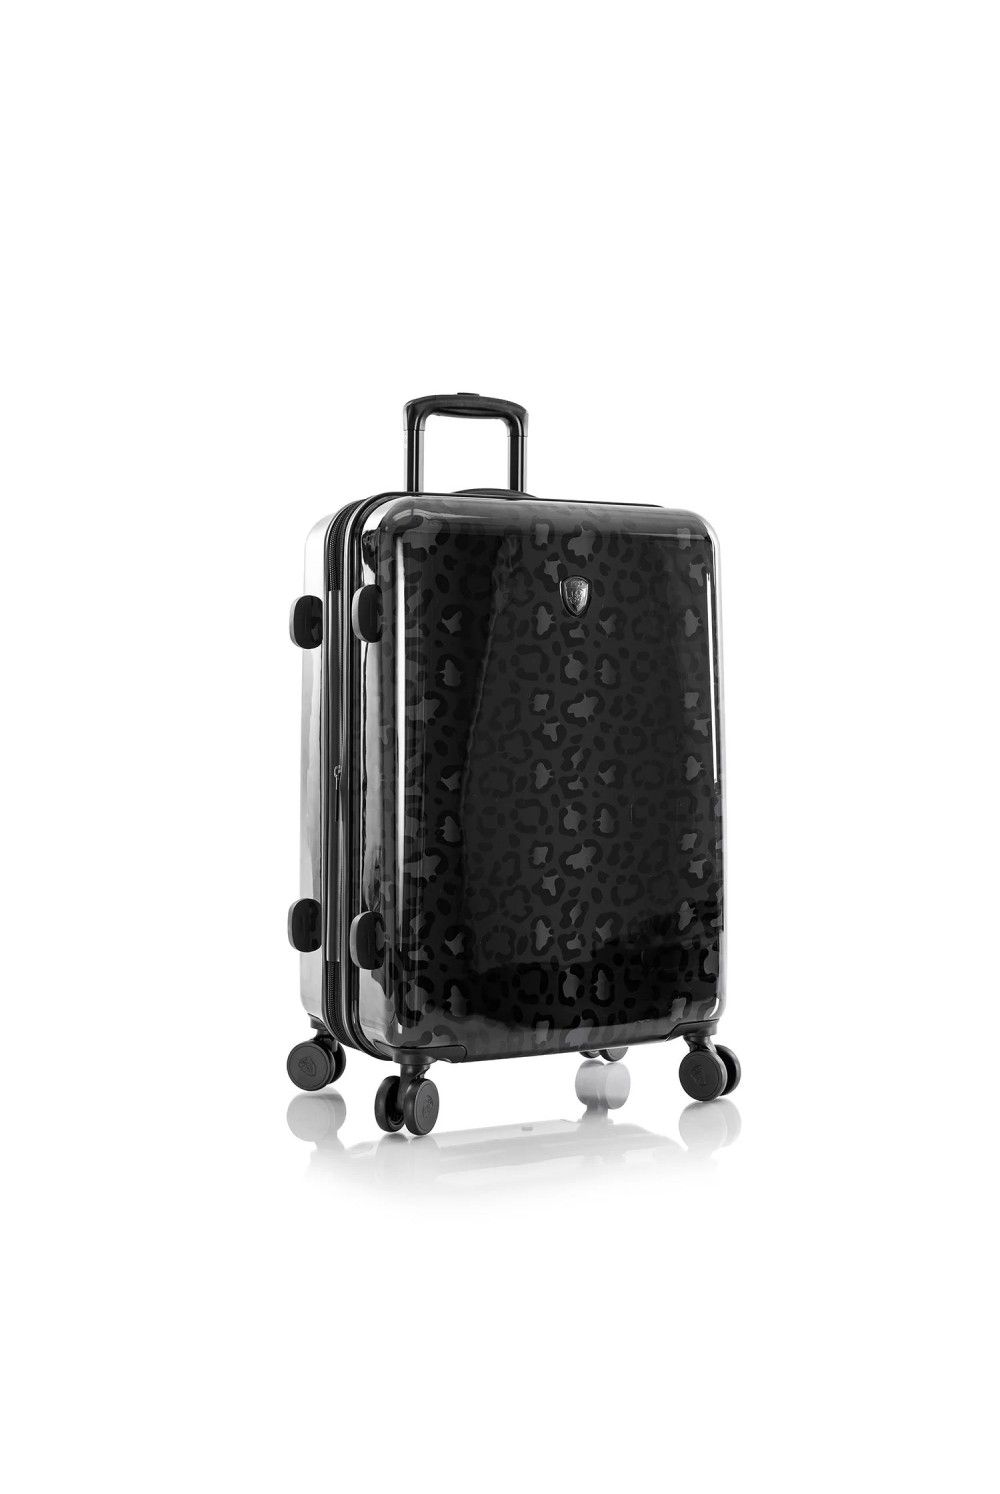 Suitcase Heys Black Leopard 4 Rad Medium 66cm expandable